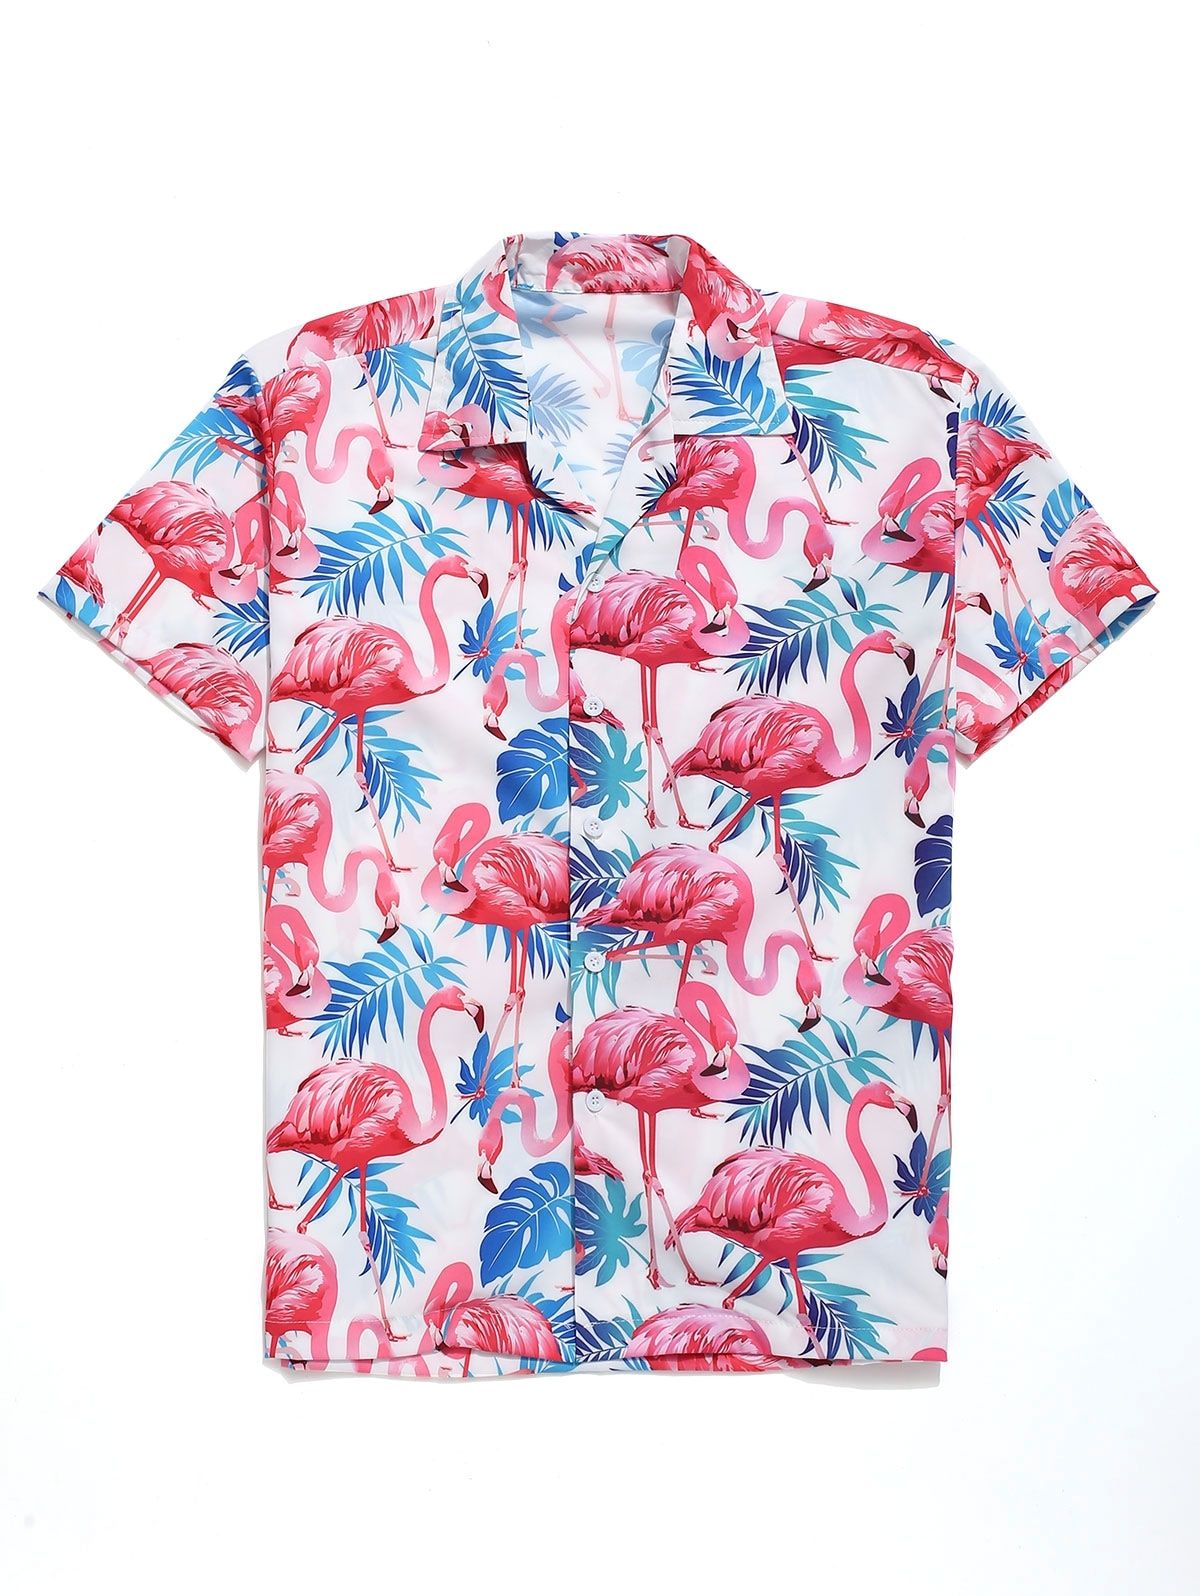 Flamingo Tropical Leaves Hawaiian Shirt Style: Short Sleeve Hawaiian Shirt, Color: White